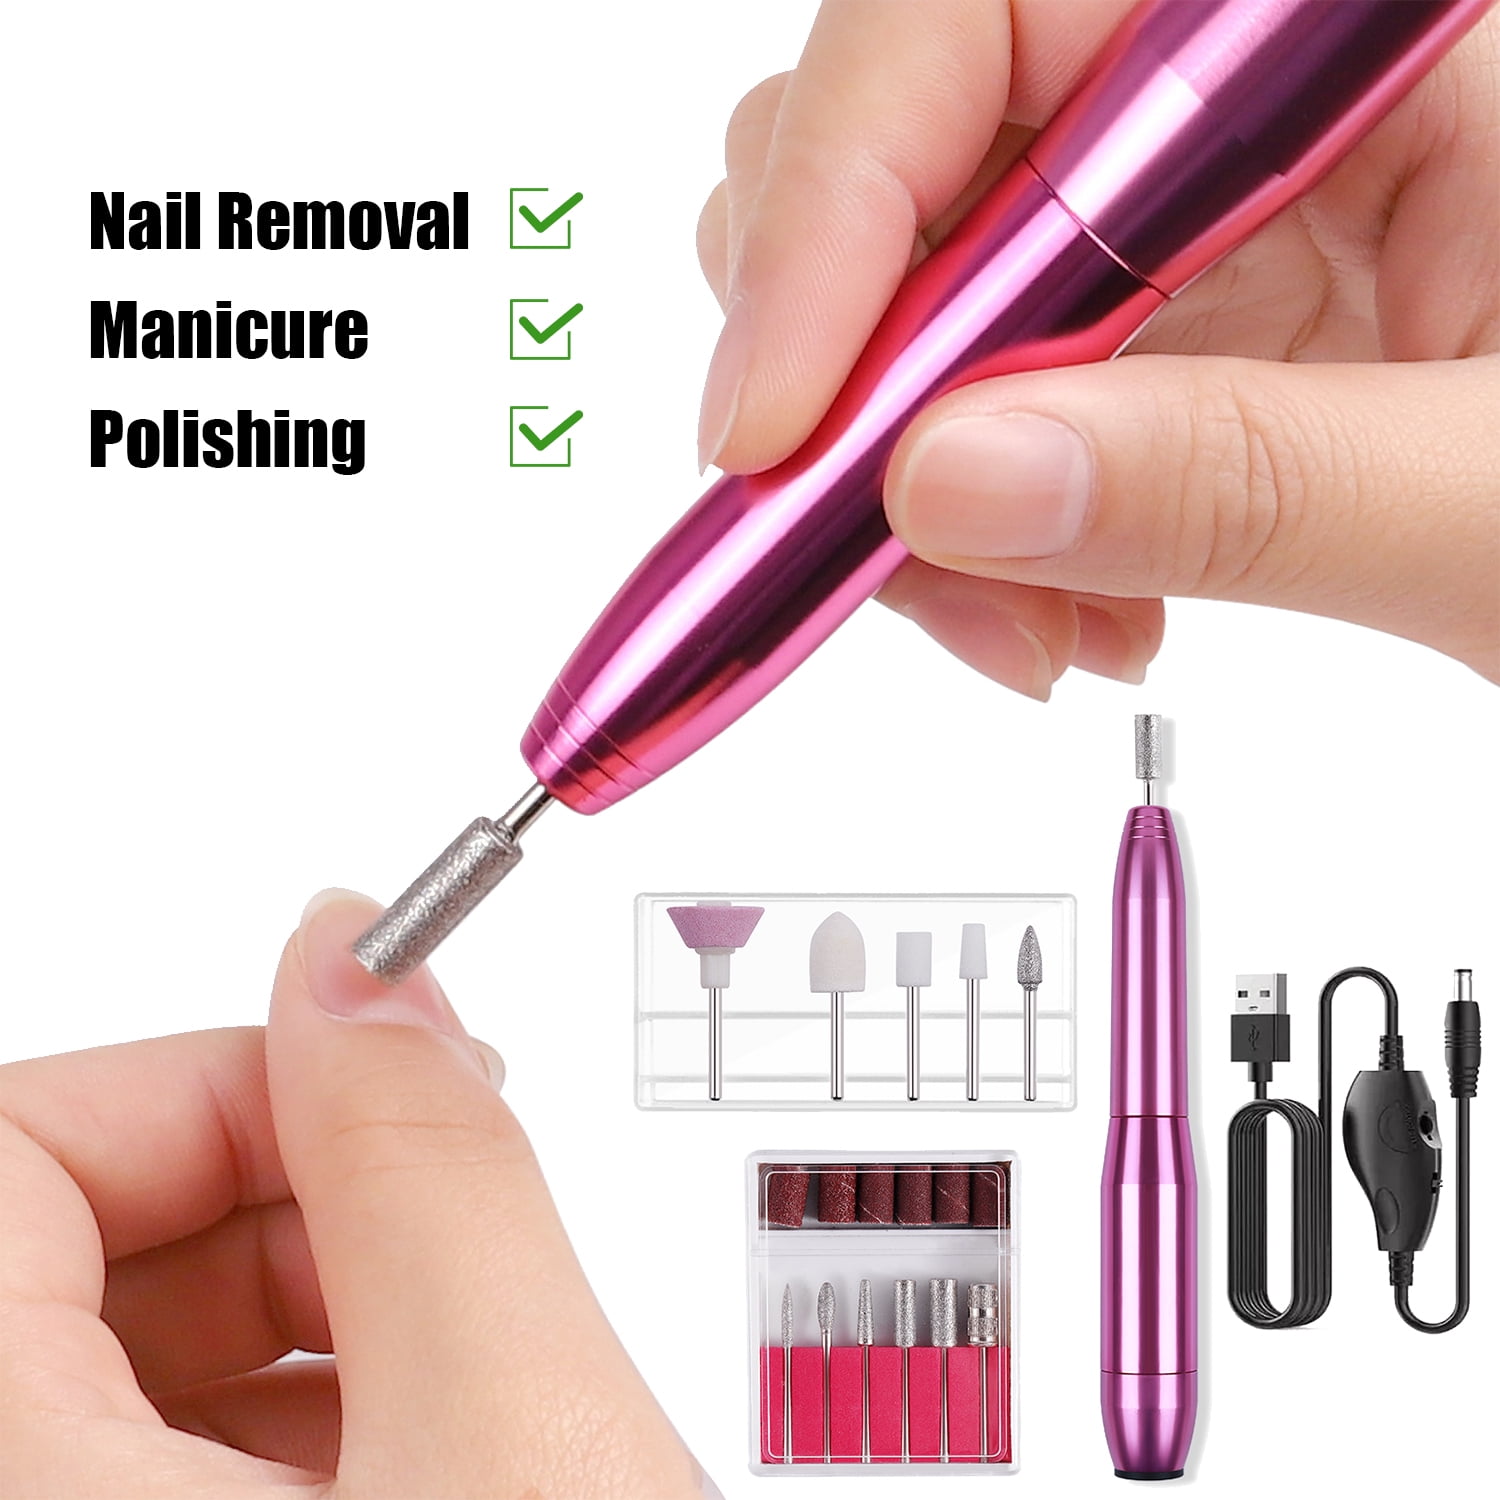 Care me Powerful Corded Electric Nail Drill Set File, Buff, Shape, Polish  Nails, Remove Cuticles & Calluses - Professional Manicure & Pedicure Kit  for Nail Care - Walmart.com